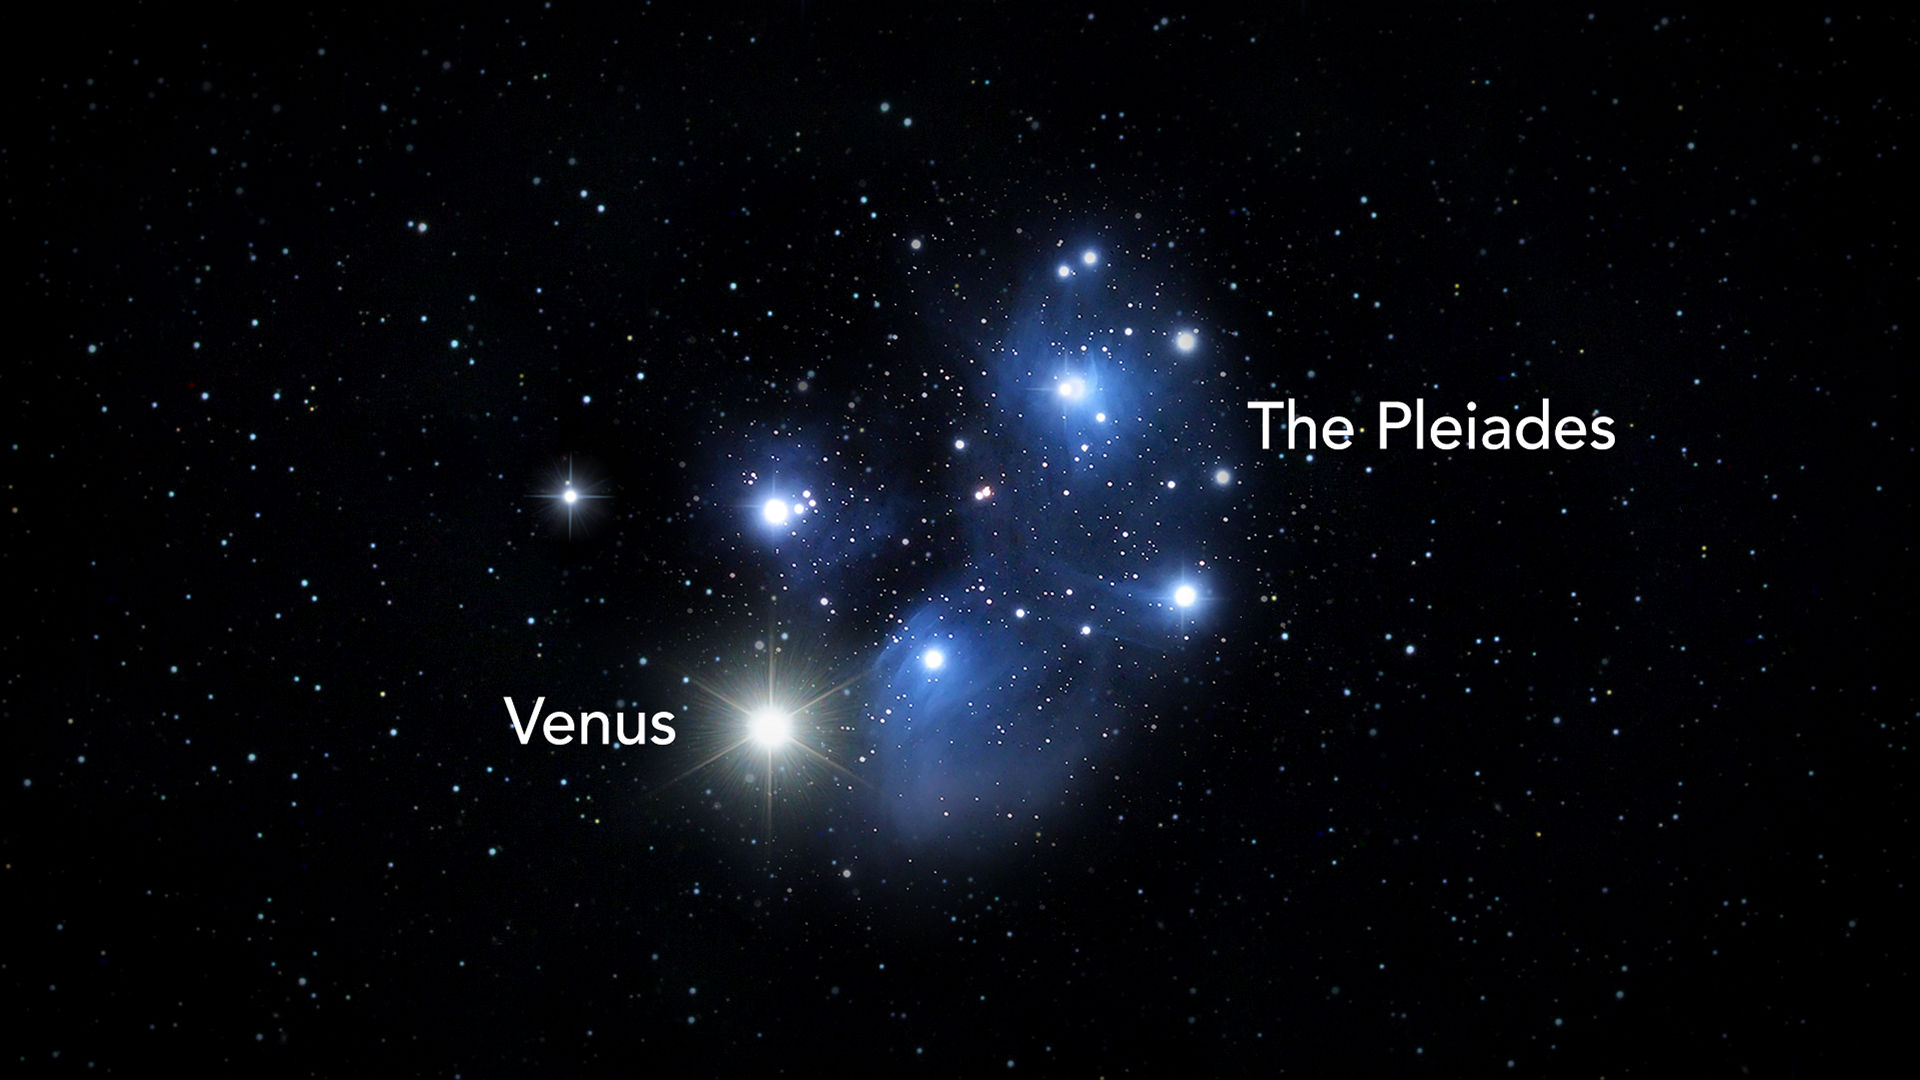 A Rare Meeting Of Venus And The Pleiades